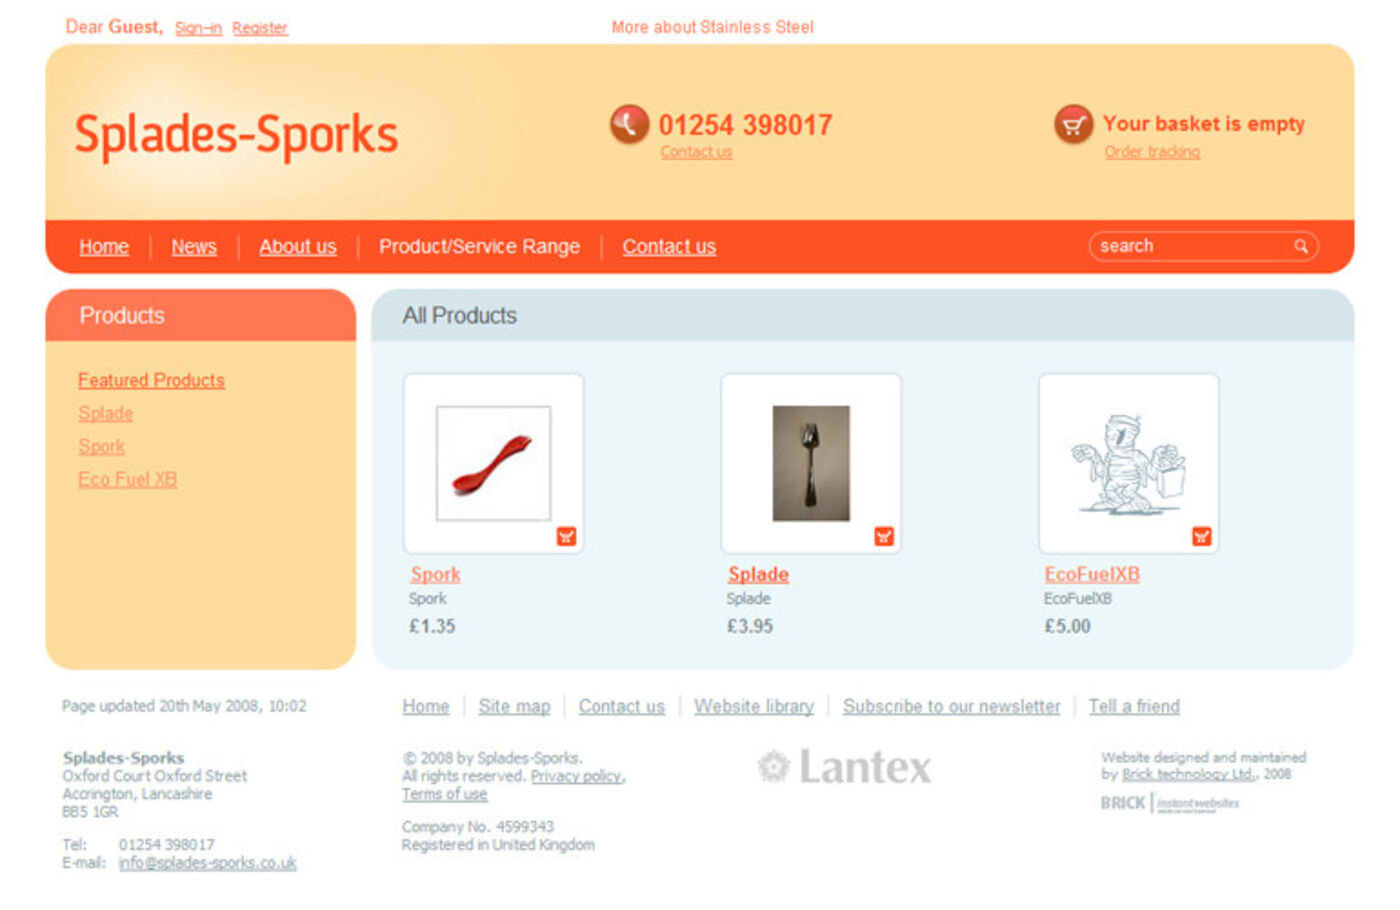 Splades-Sporks Products